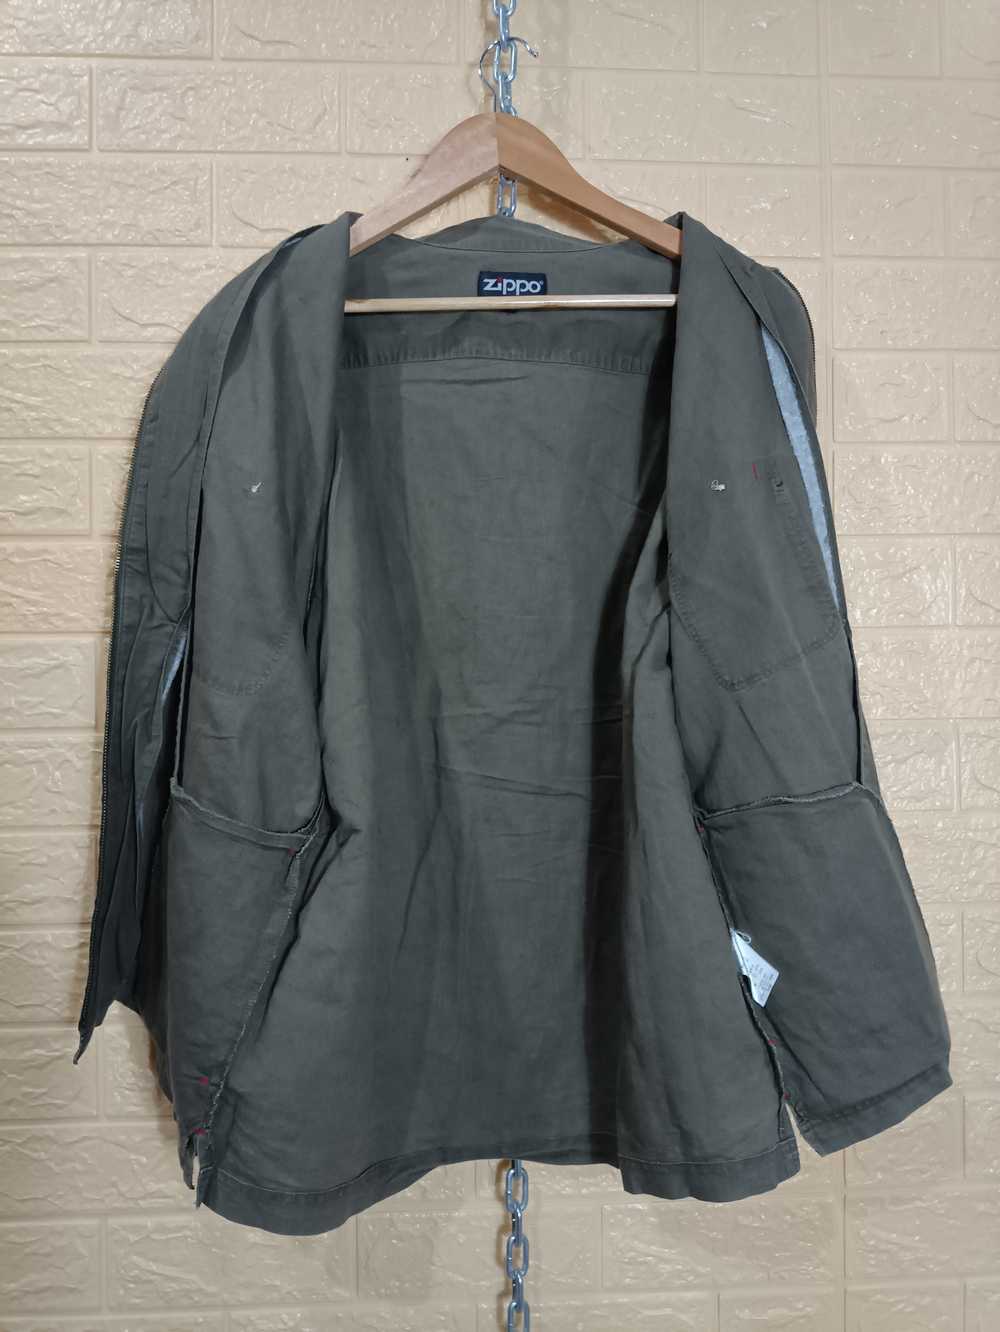 Zippo - Zippo Zipper Jacket - image 10